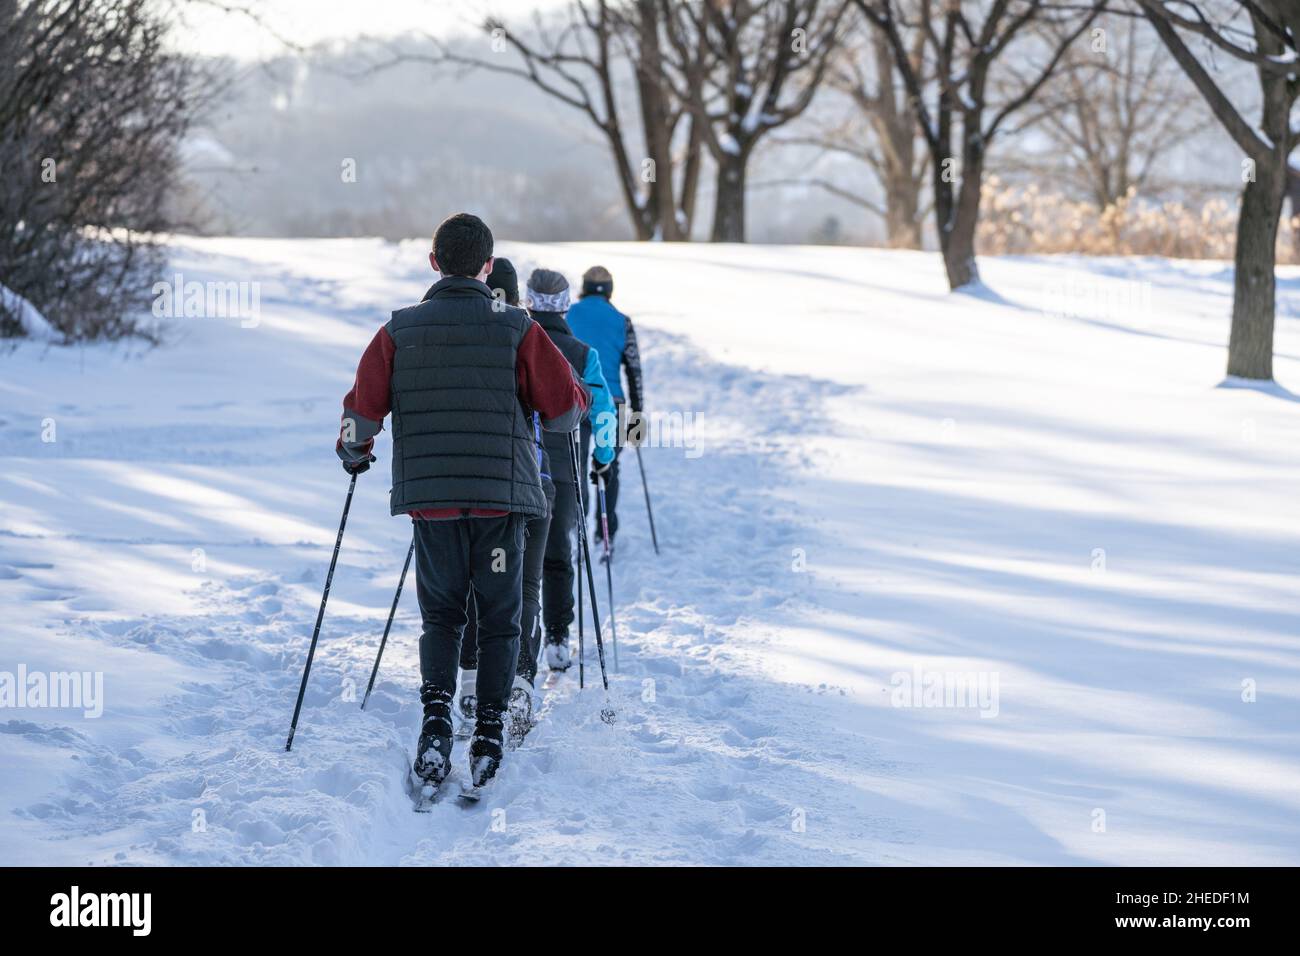 Berks County, Pennsylvania, 17. Dezember 2020: Langläufer auf Loipen nach dem Schneesturm. Stockfoto